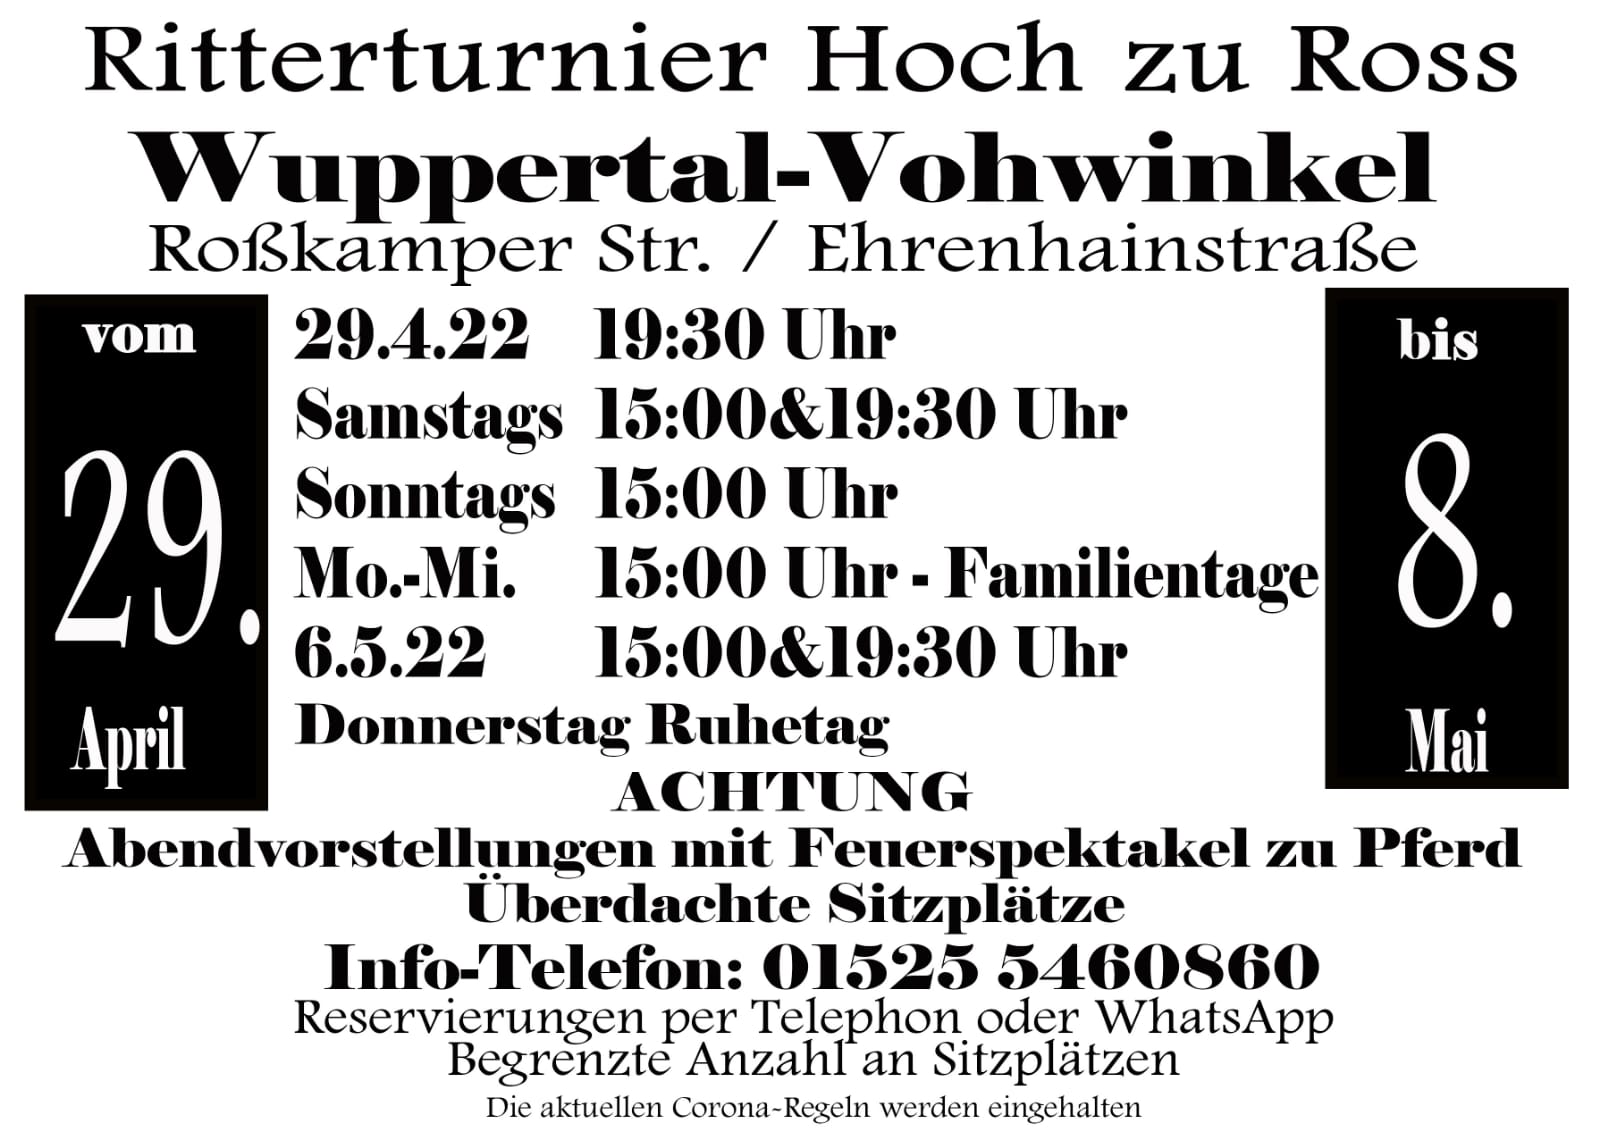 Grosses Ritterturnier in Wuppertal- Vohwinkel, Roßkamper str/ Ehrenhainstr, nähe Tierpark